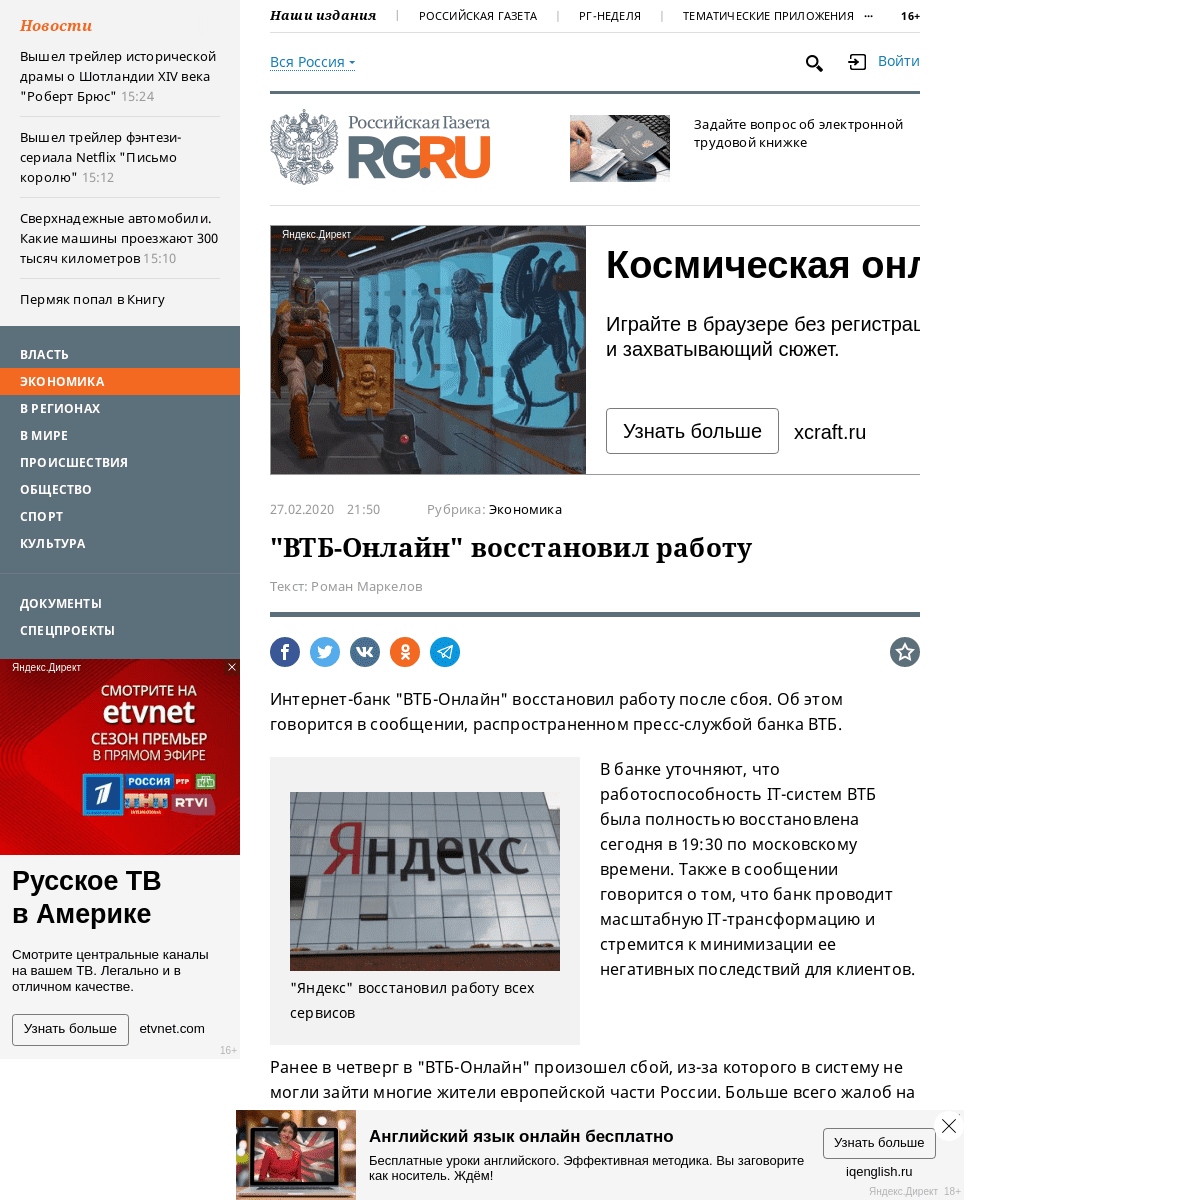 A complete backup of rg.ru/2020/02/27/vtb-onlajn-vosstanovil-rabotu.html